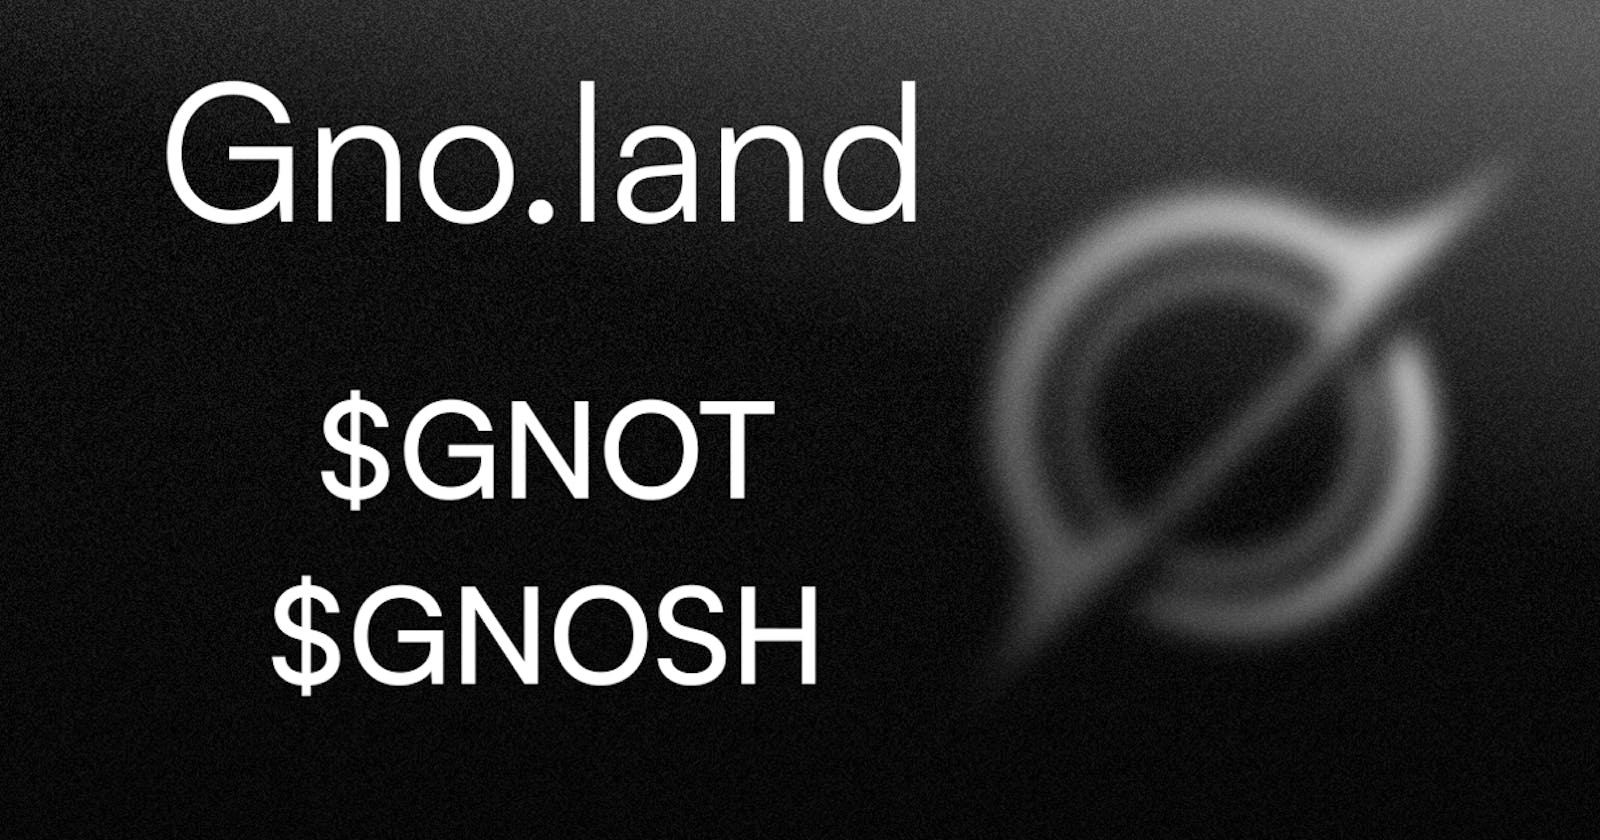 GNOT vs GNOSH tokens in GnoLand